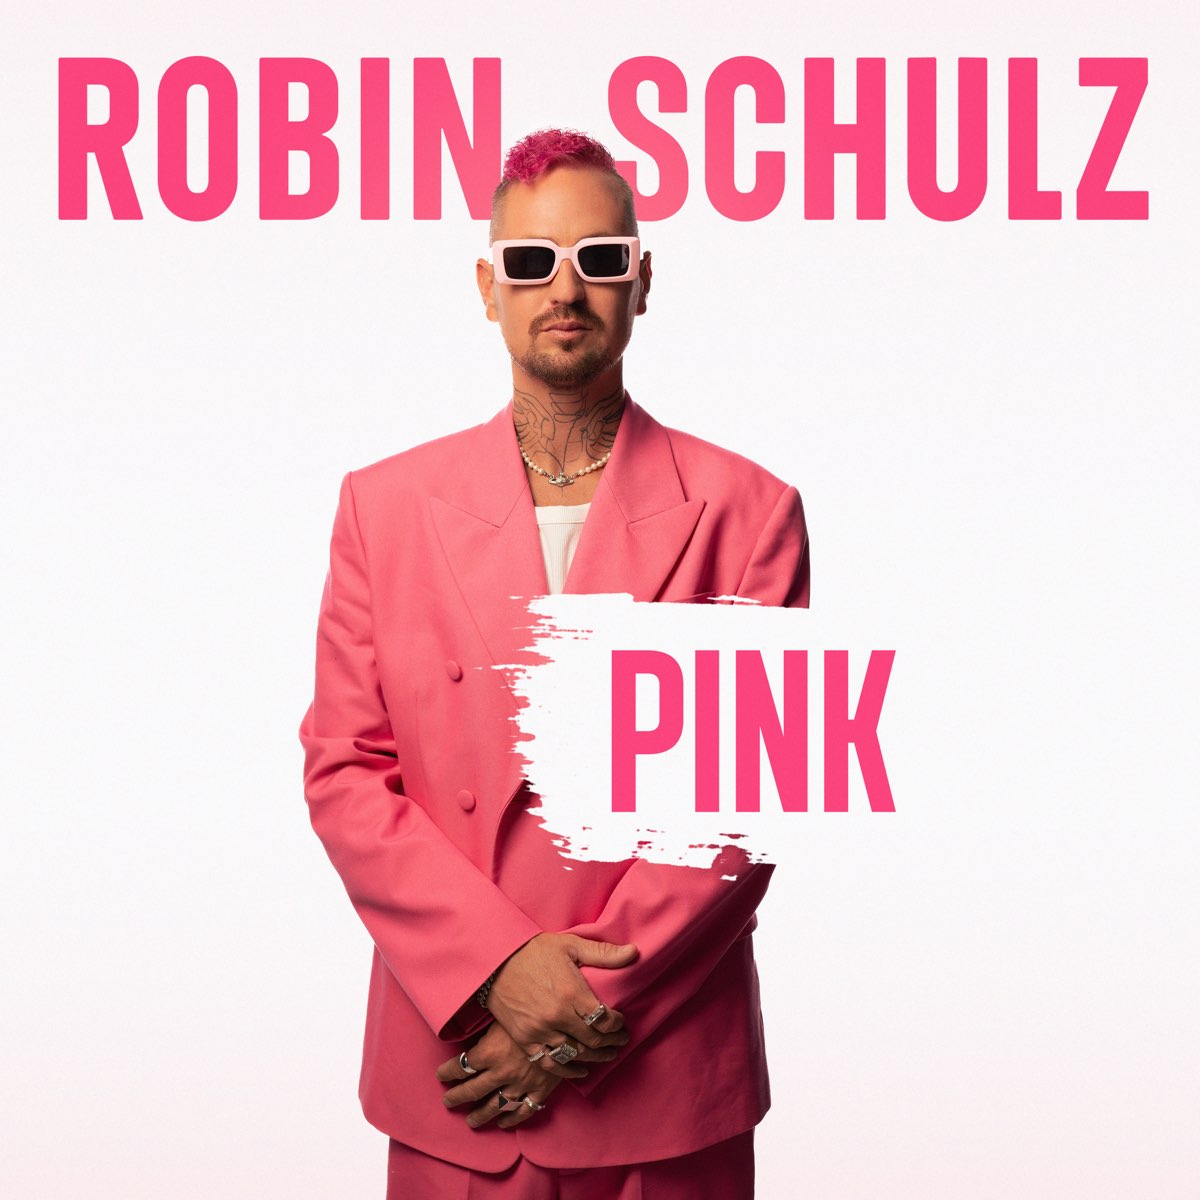 Robin Schulz Pink cover artwork